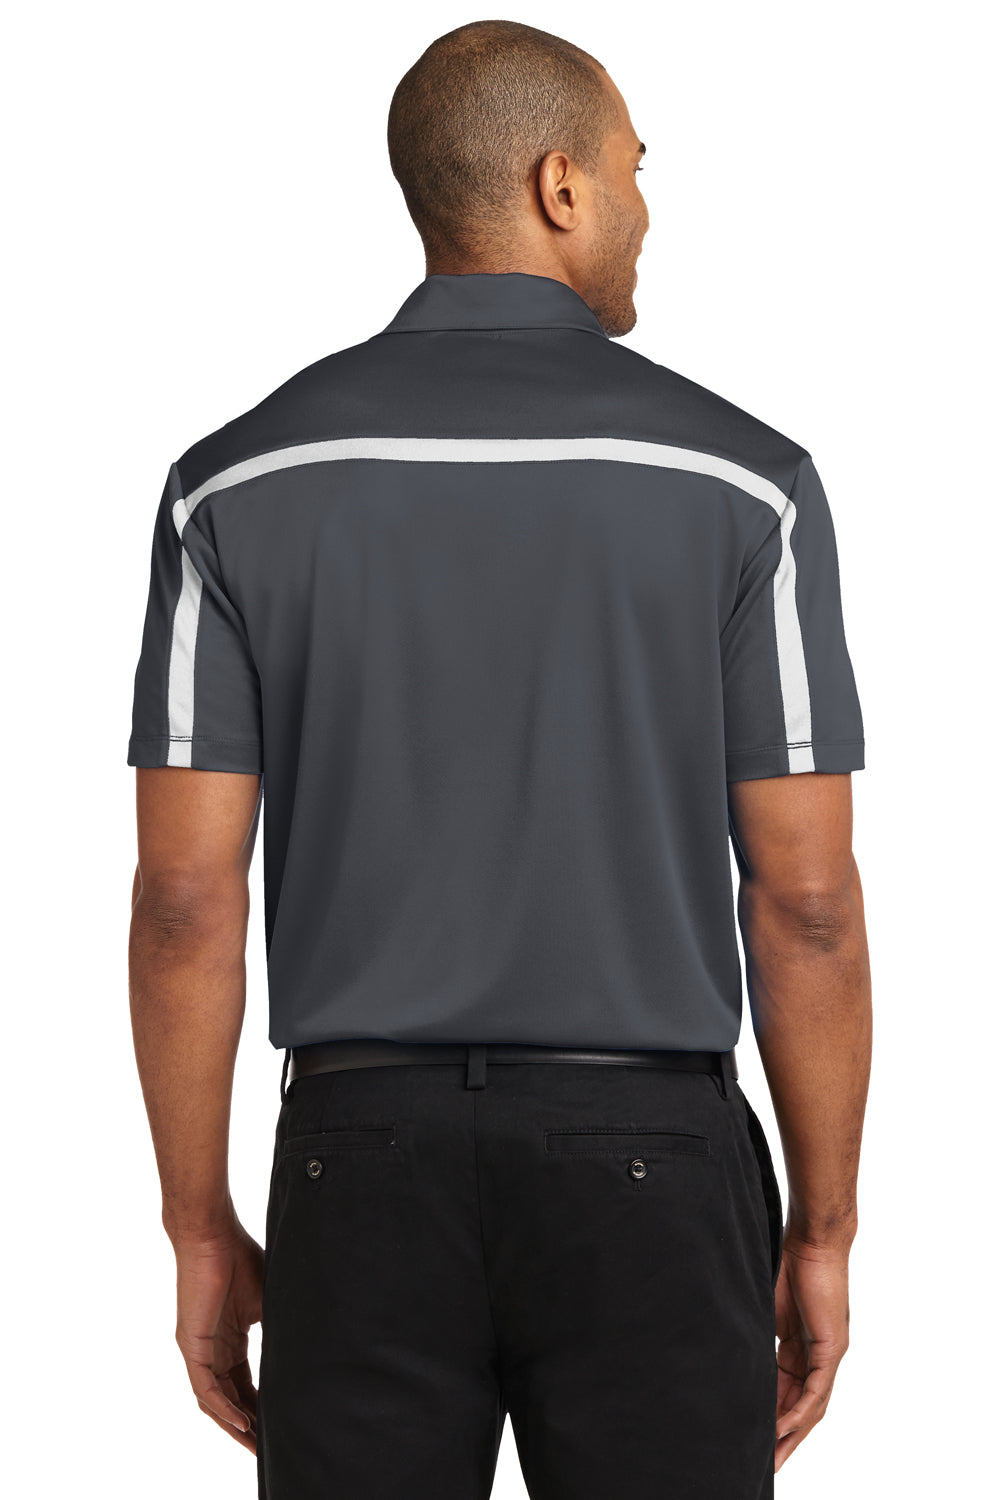 Port Authority K547 Mens Silk Touch Performance Moisture Wicking Short Sleeve Polo Shirt Steel Grey/White Back